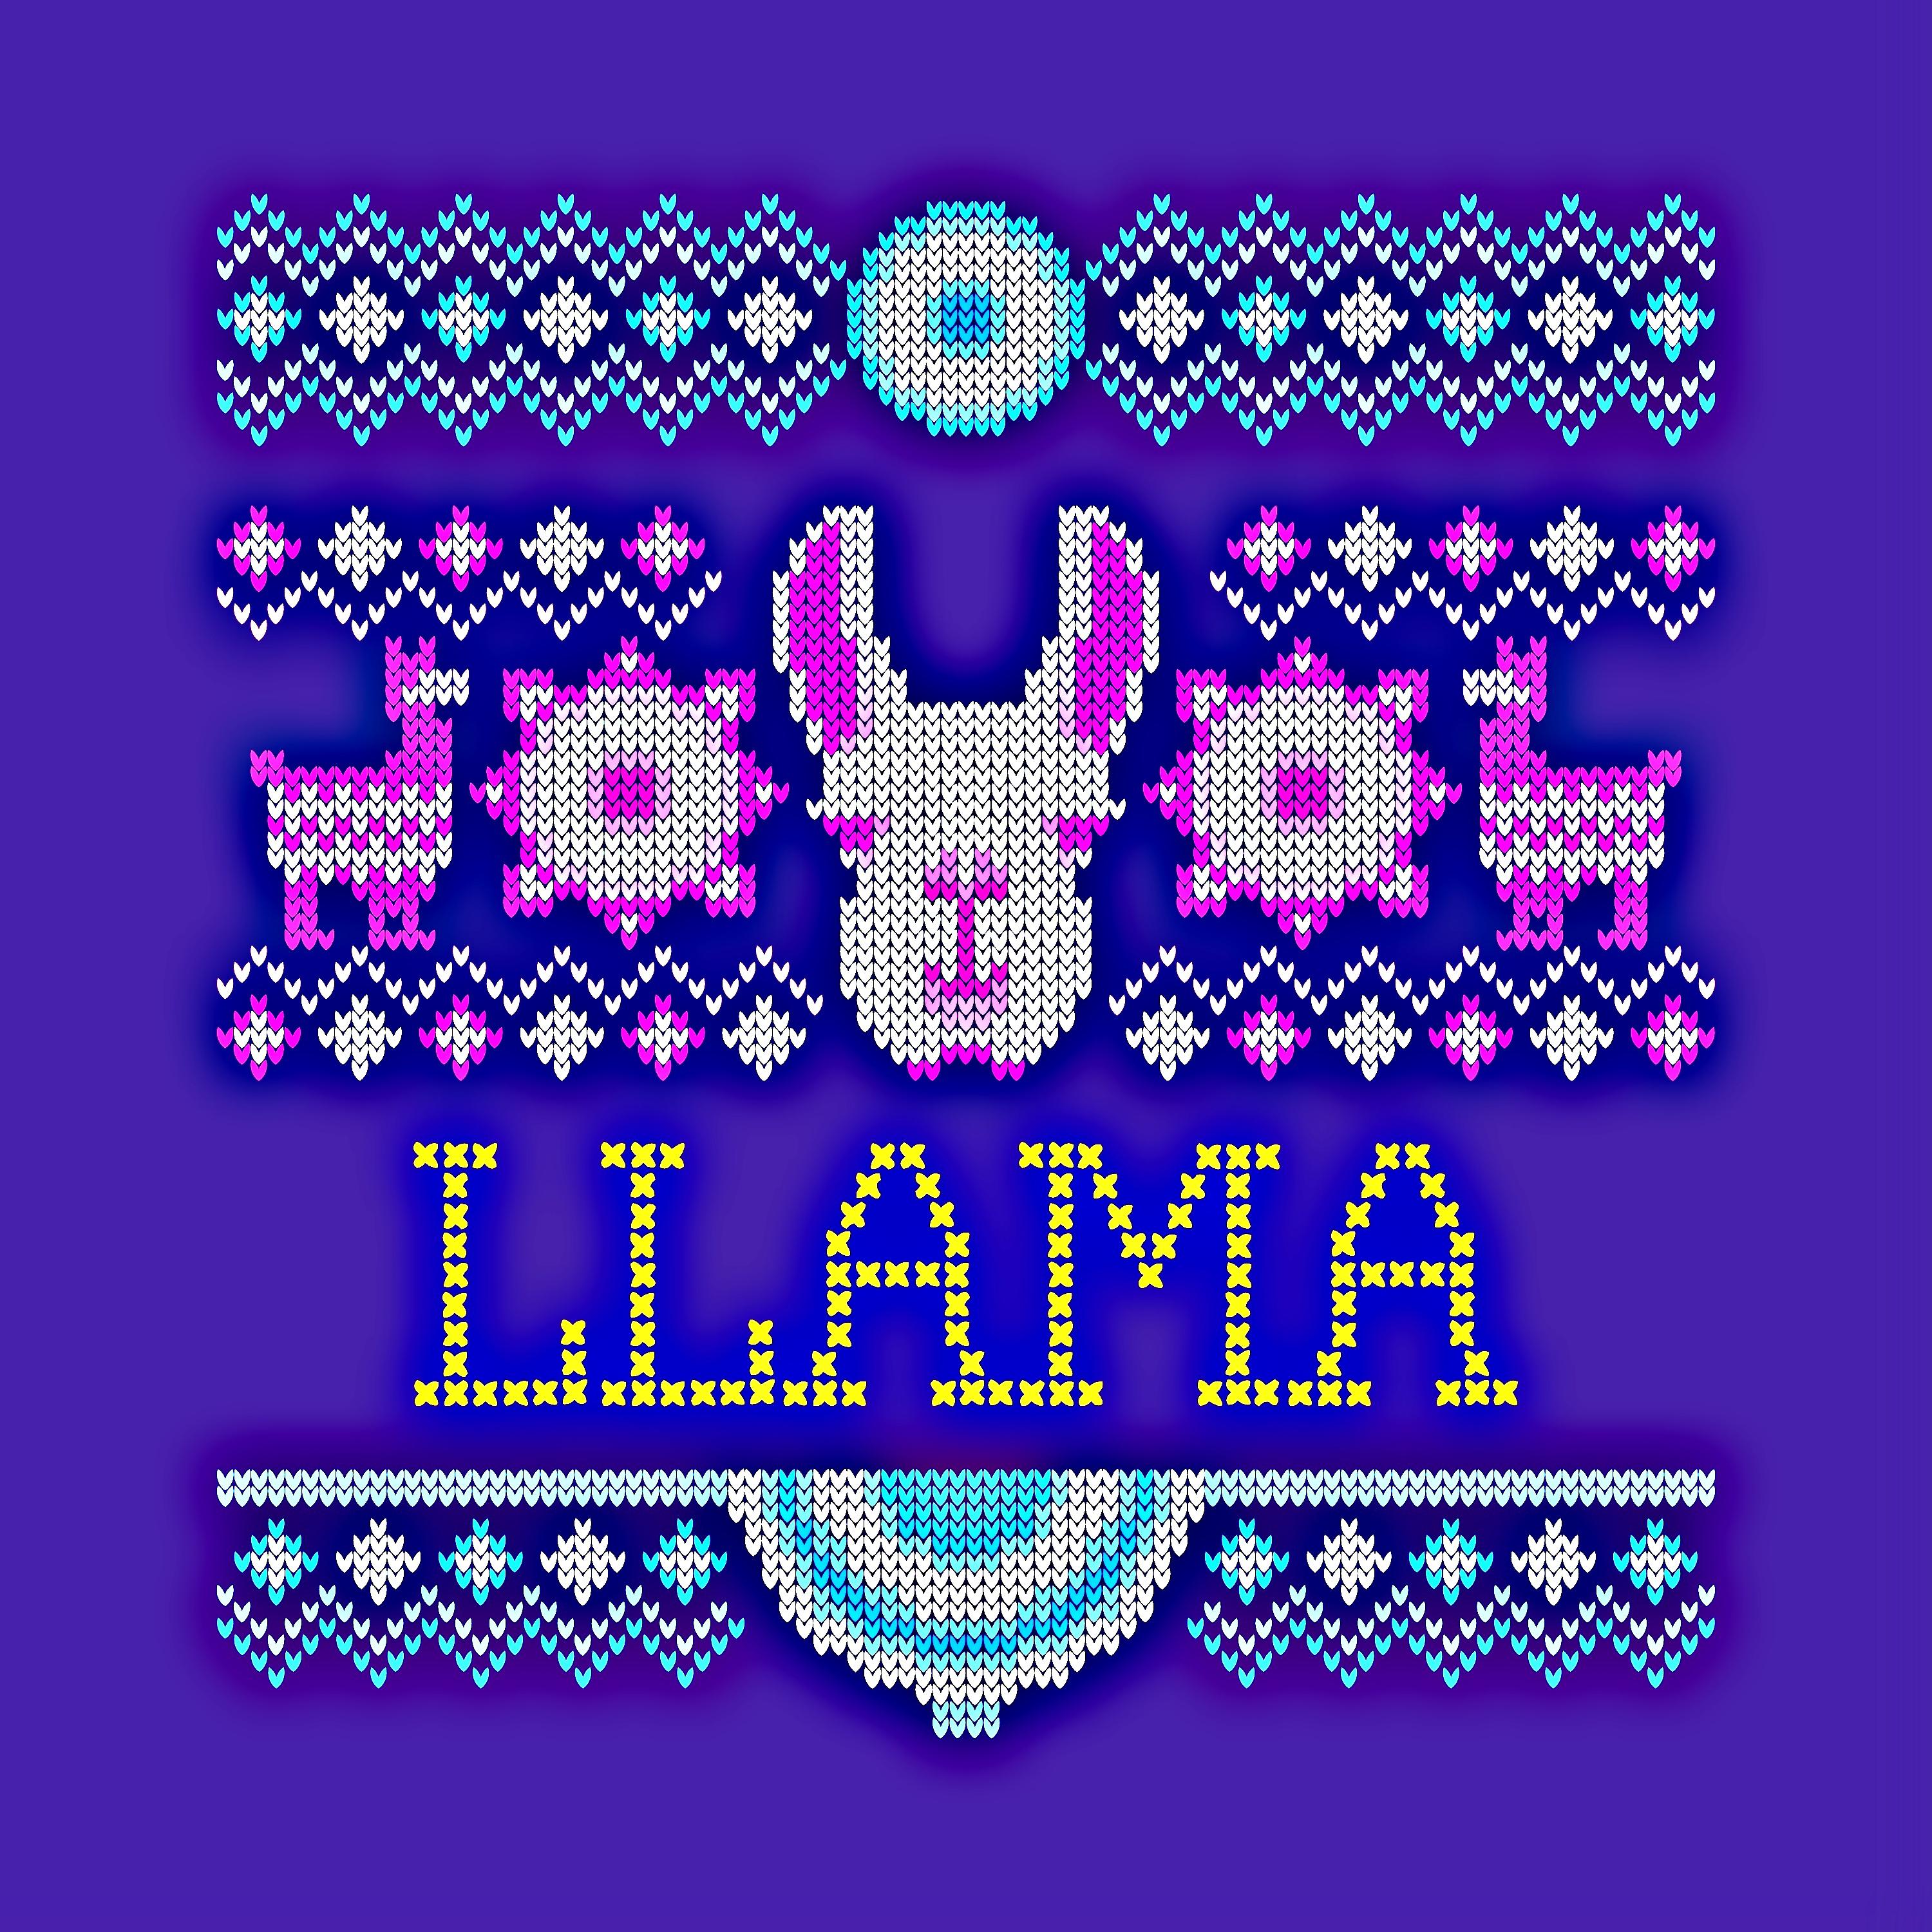 Постер альбома Llama